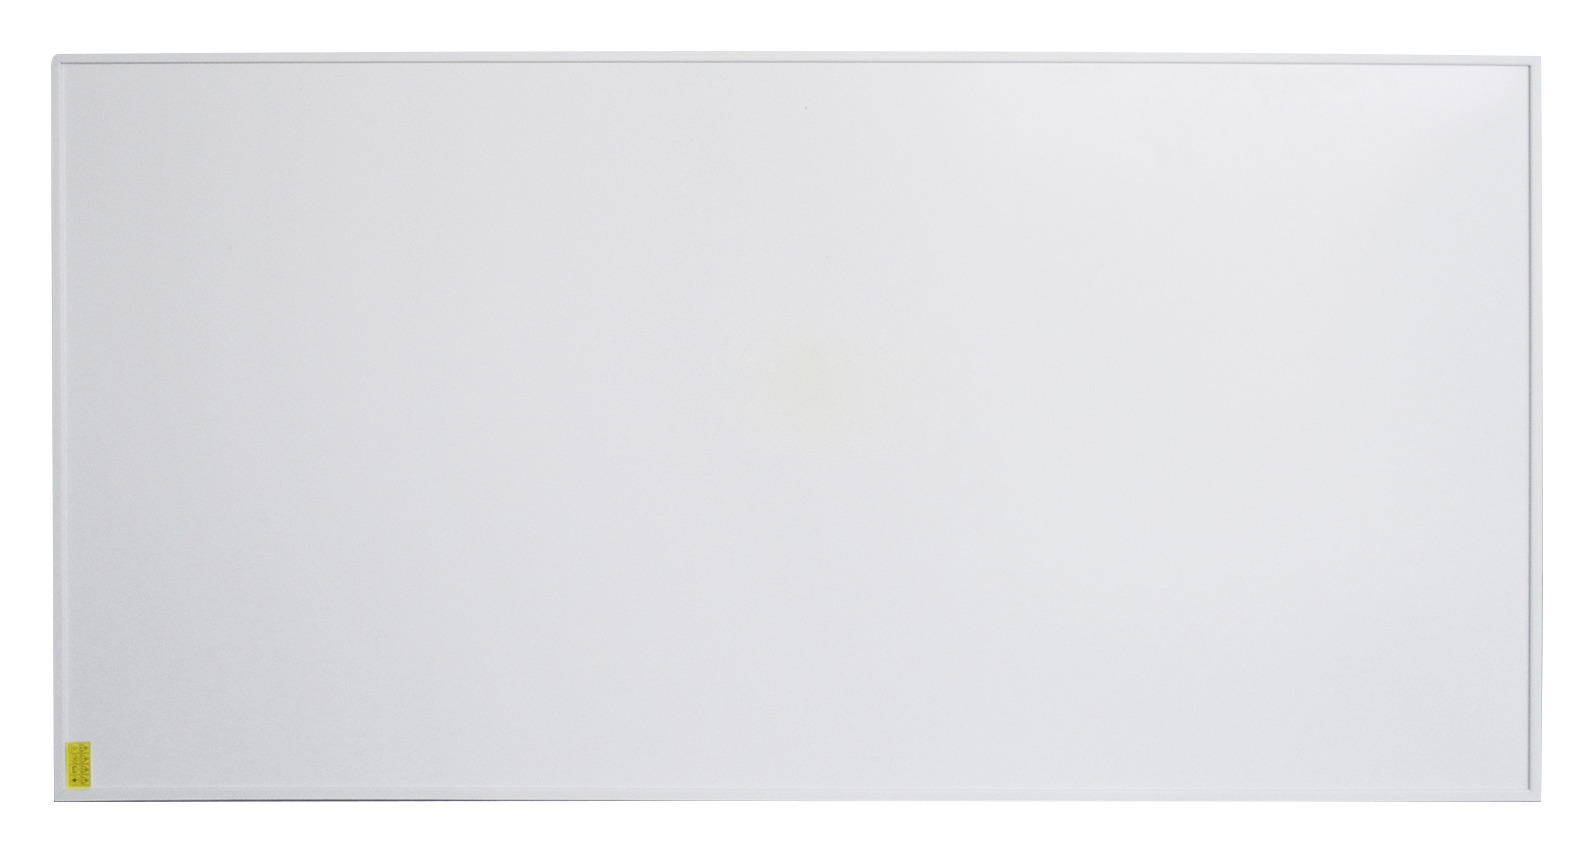 INFRAROT-HEIZPANEEL Ambiente 720 W  - Weiß, Trend, Kunststoff/Metall (119,5/59,5/2,2cm) - Atrigo